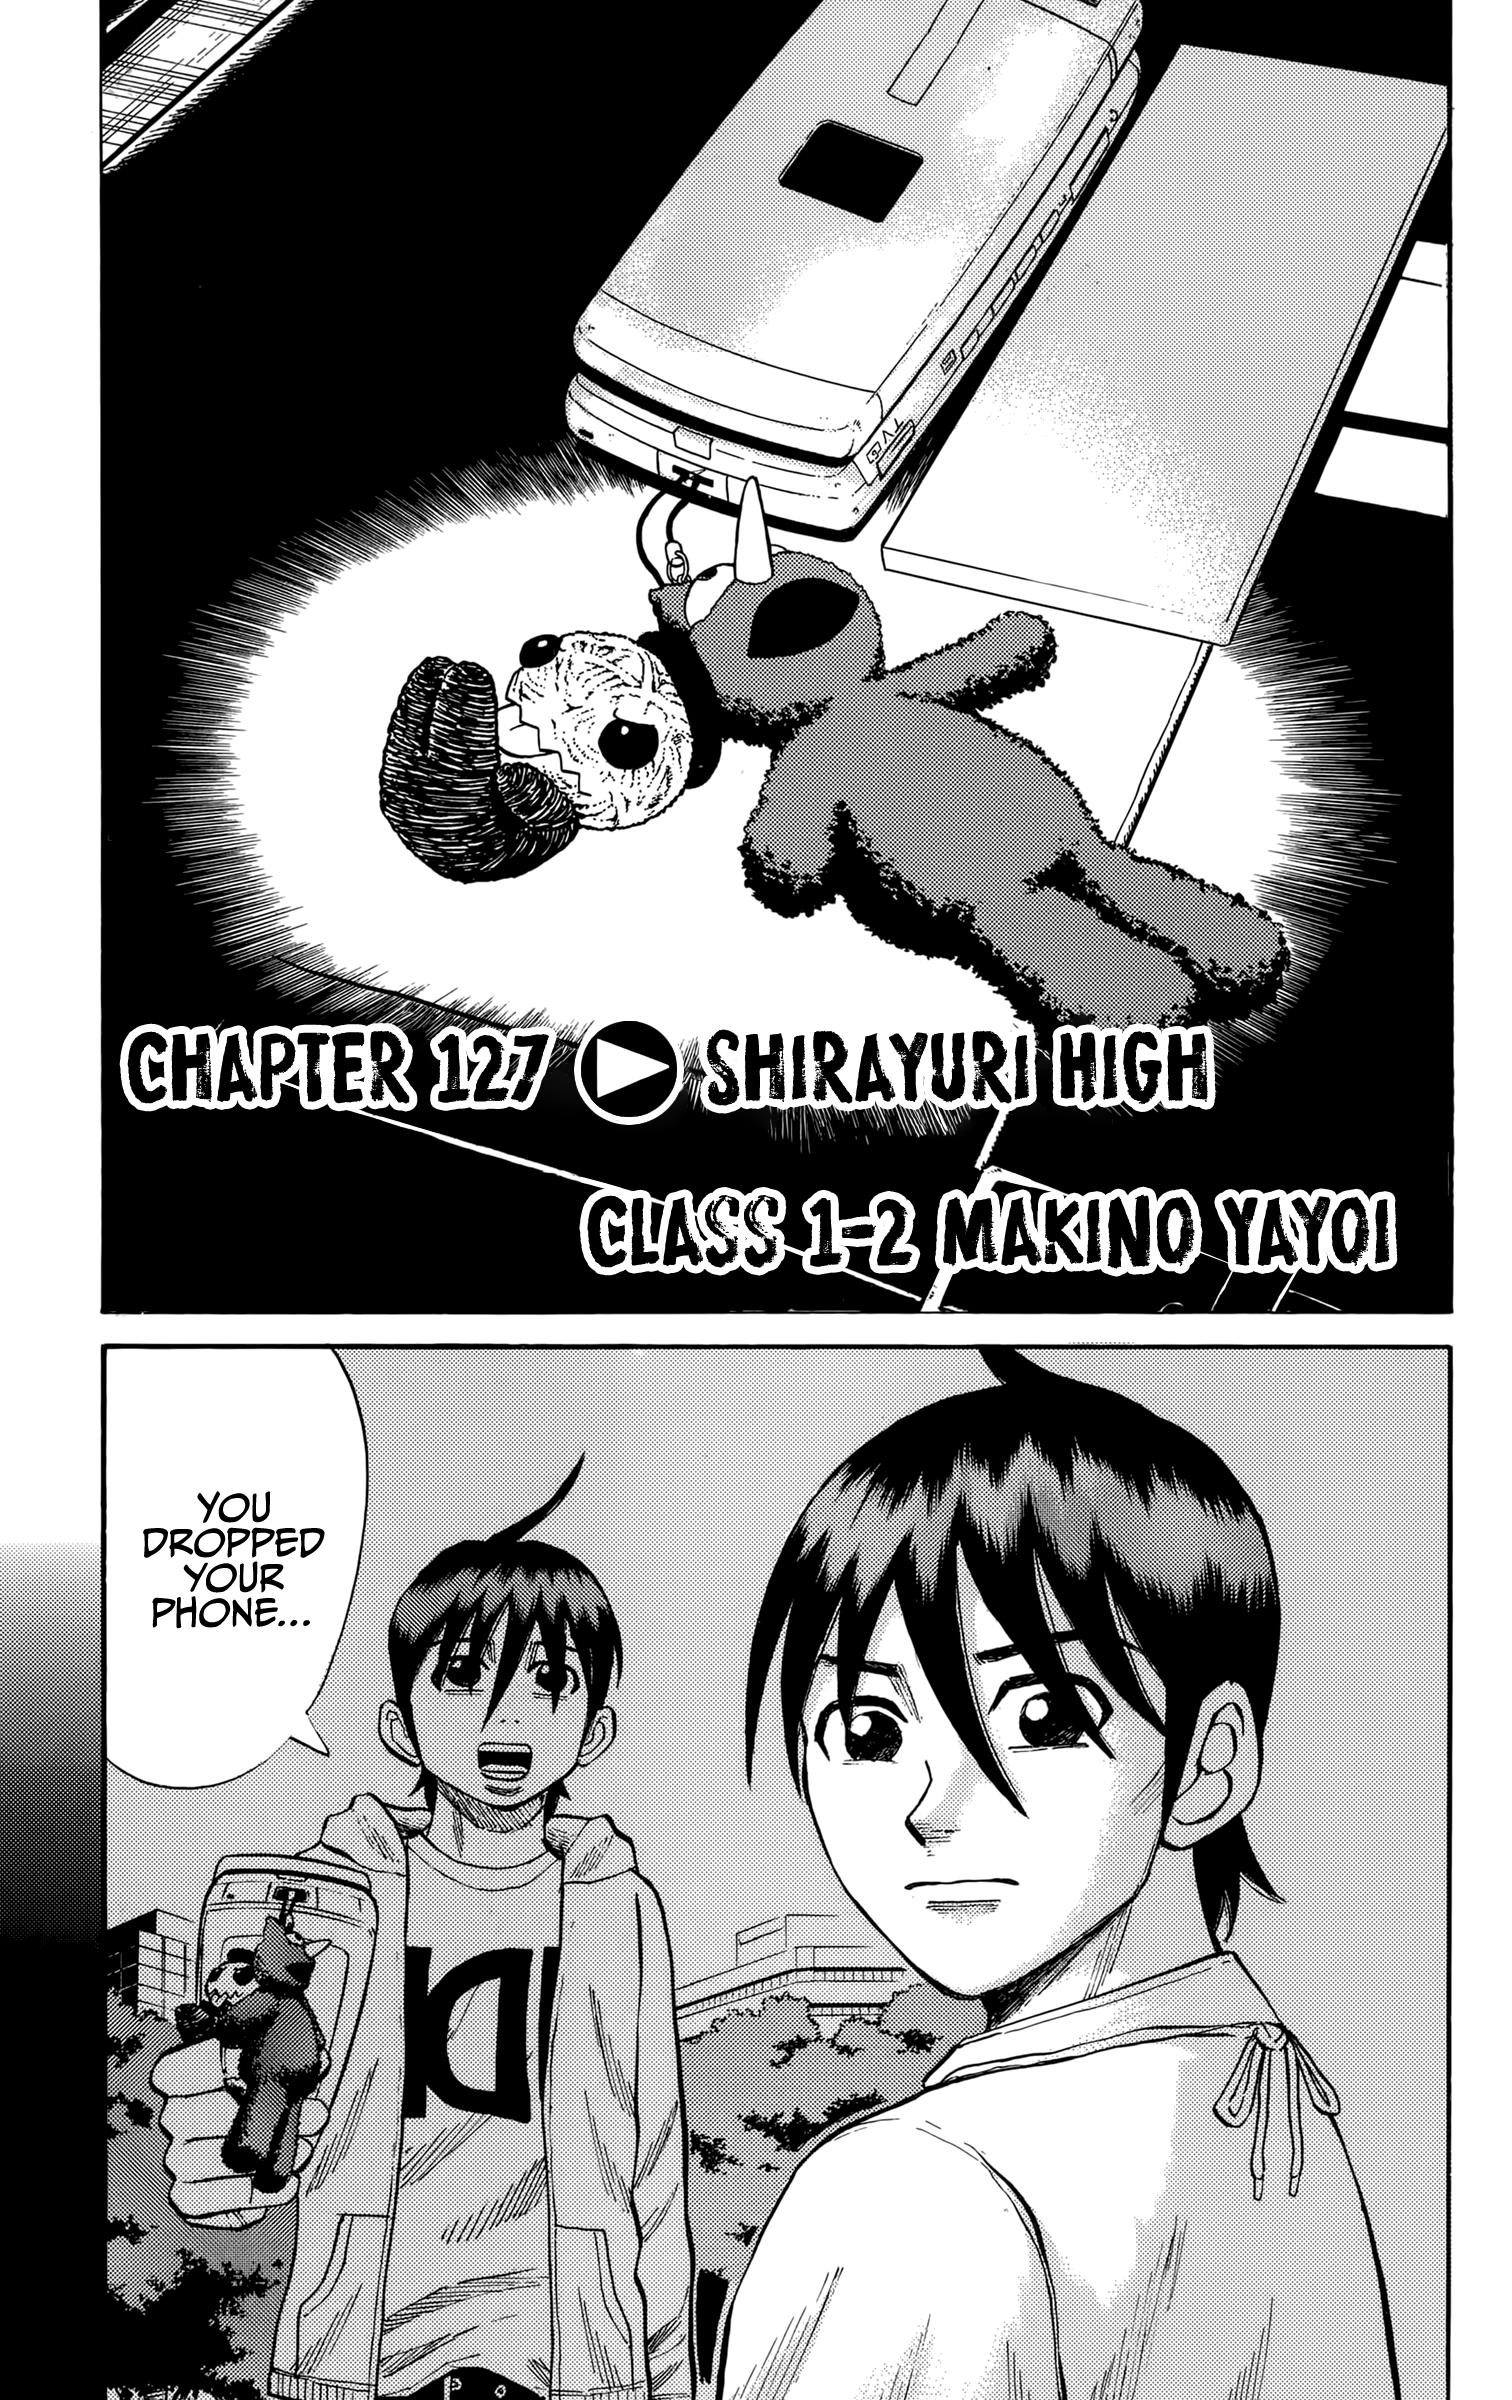 Nanba Mg5 Vol.15 Chapter 127: Shirayuri High Class 1-2 Makino Yayoi - Picture 1